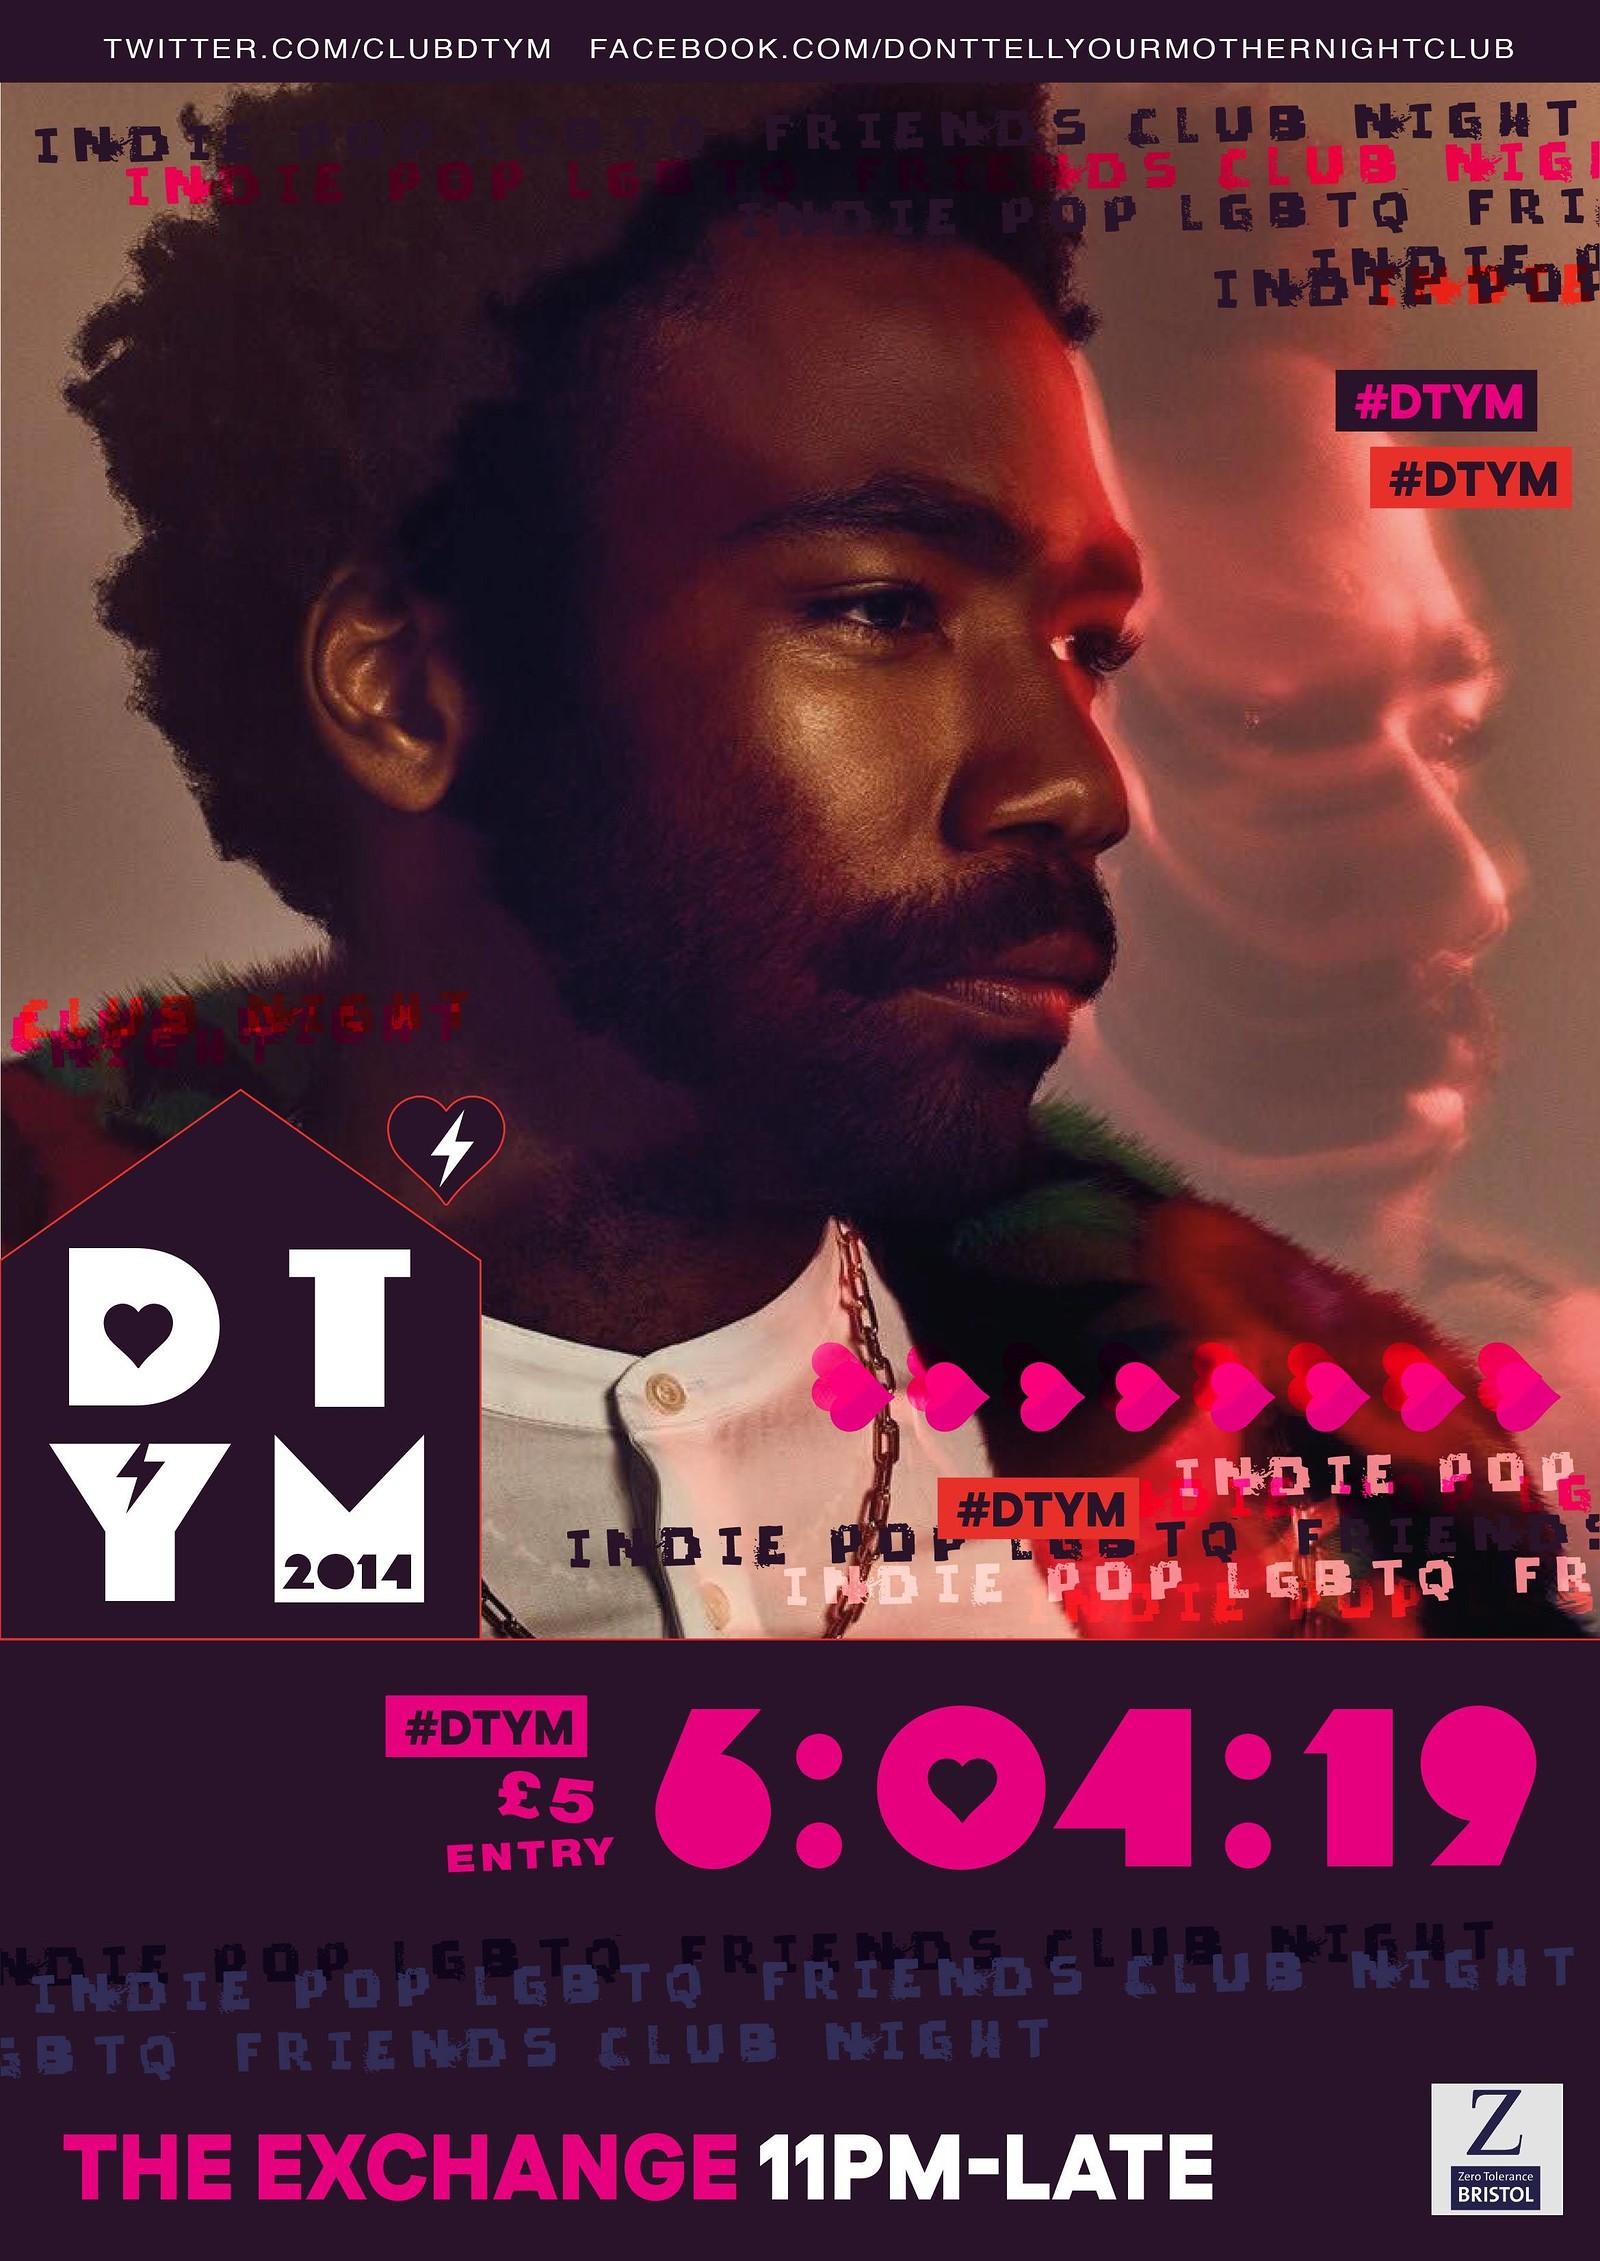 DTYM - Saturday 6th April at Exchange